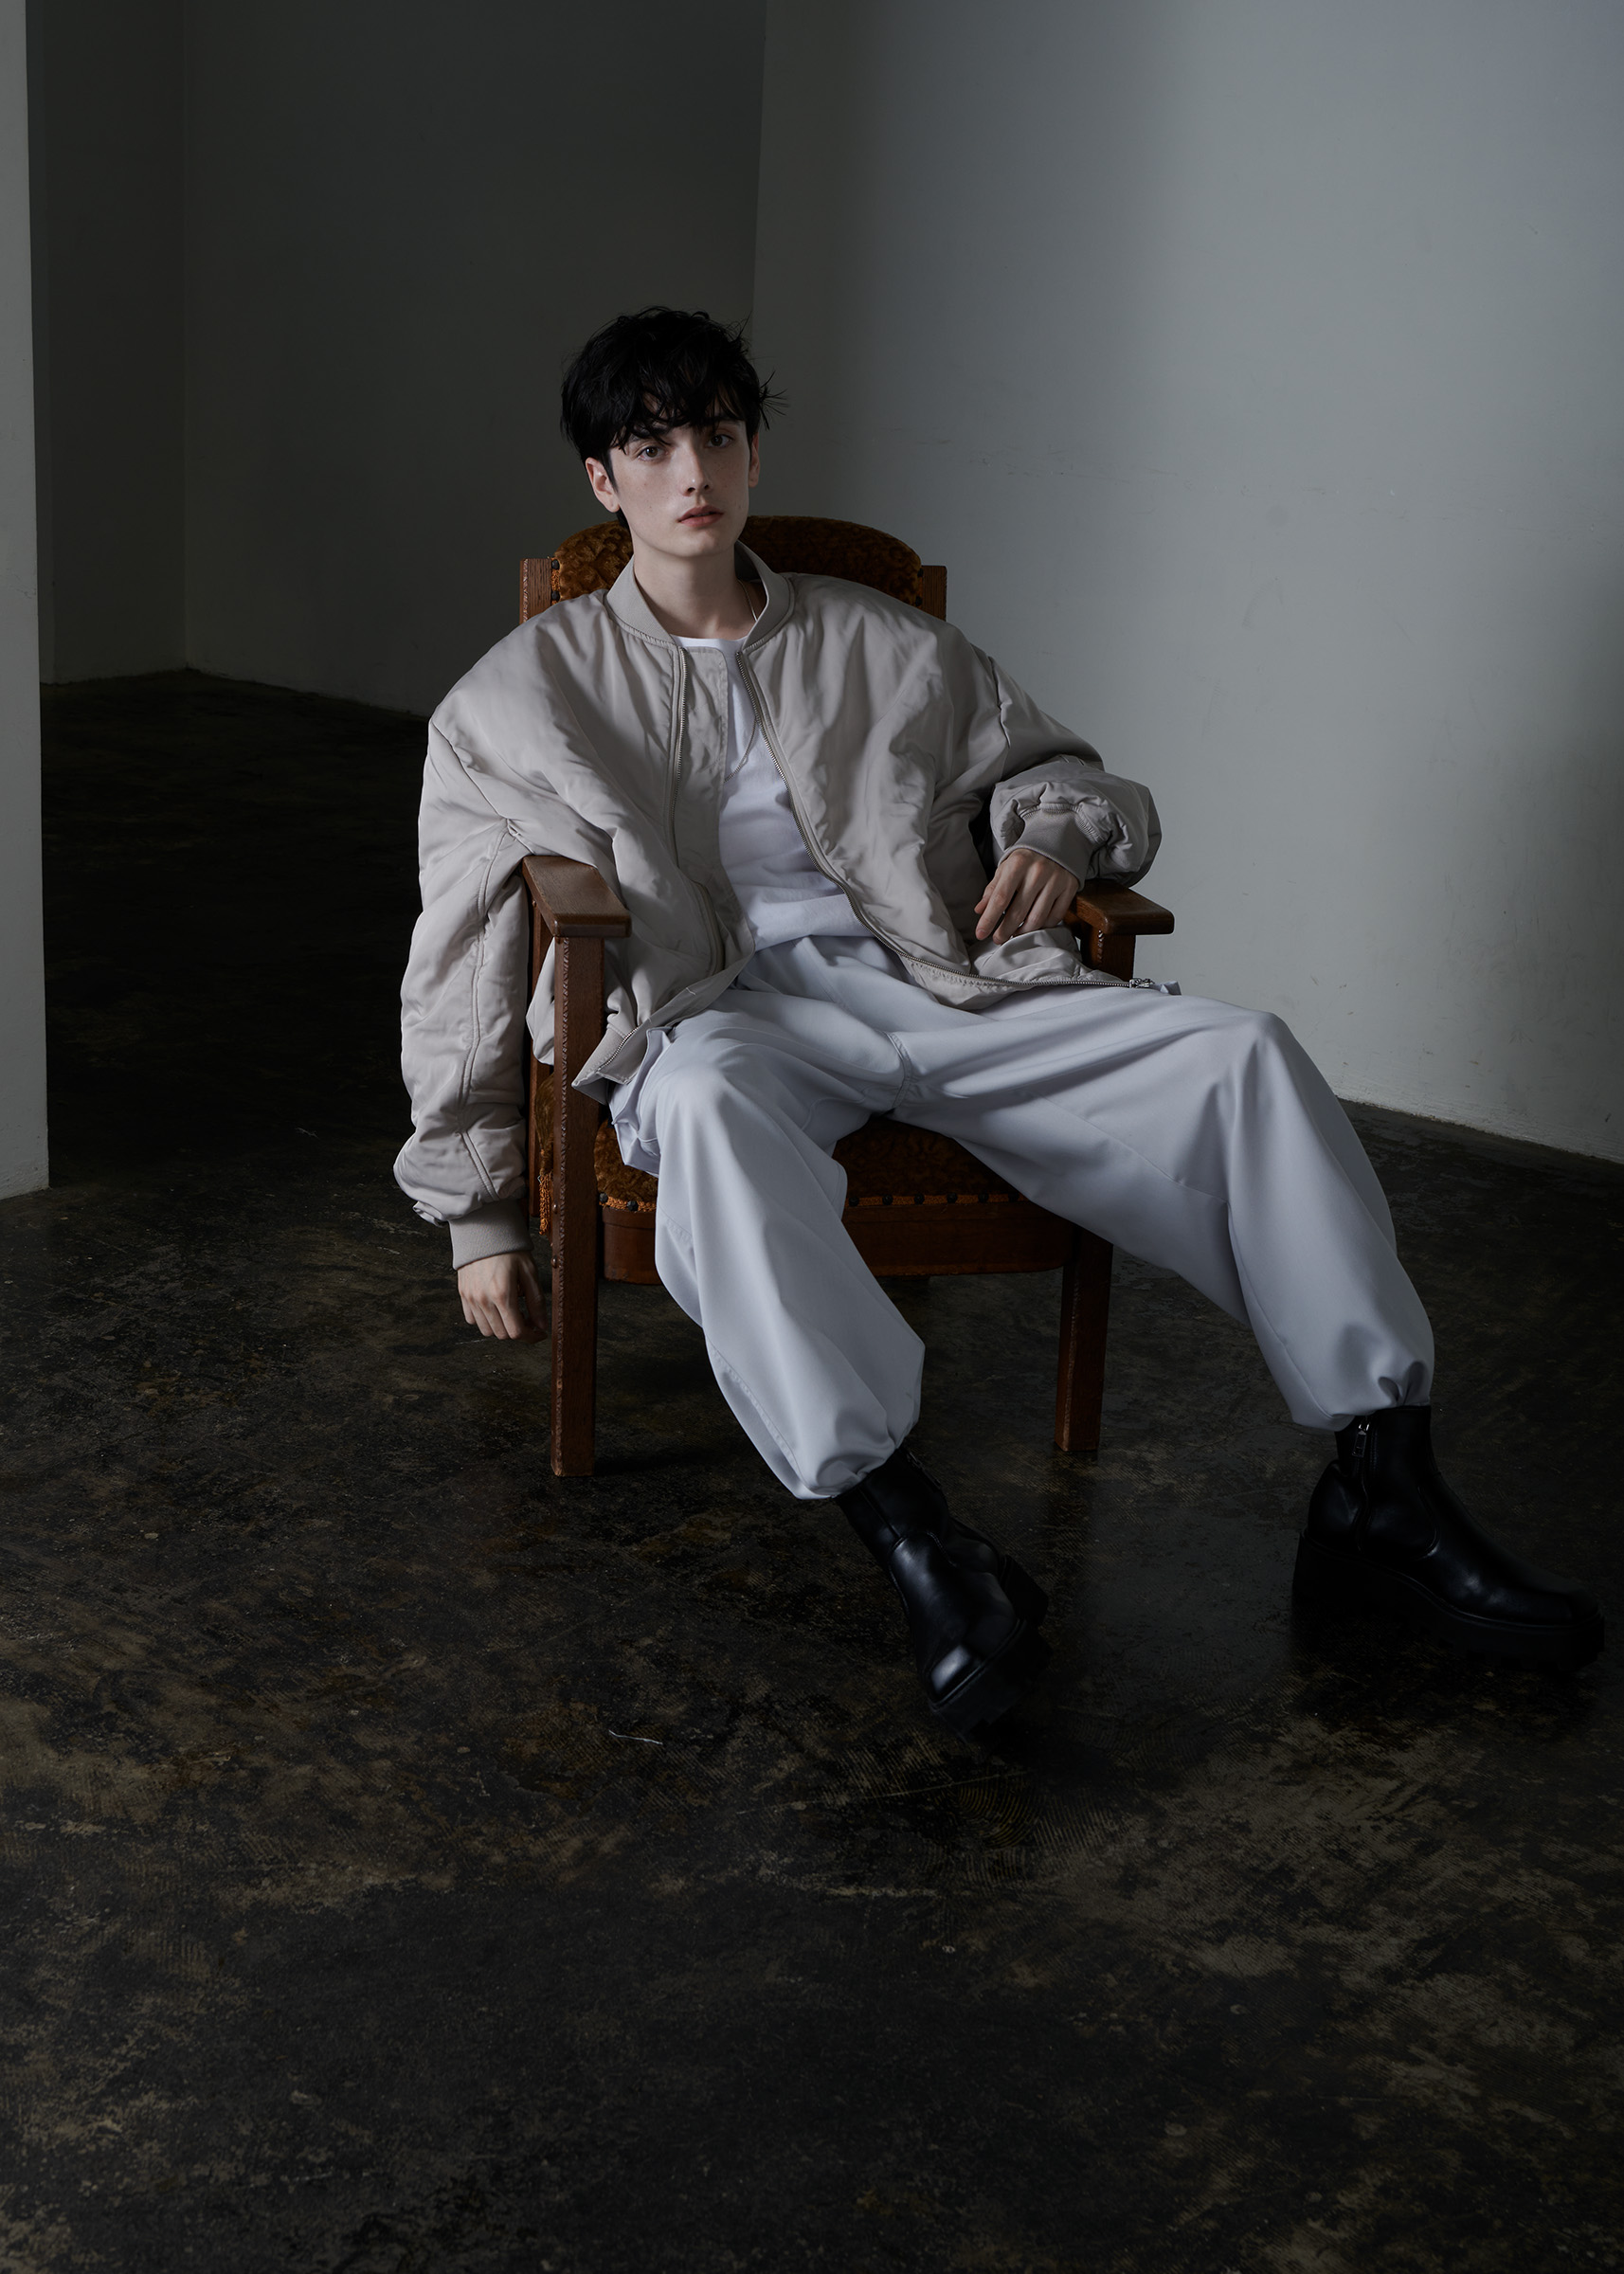 ＊＊ Direction&Styling : Tomohiro Iwagaya / Model : Jay McMillan(image models) / Hair&Make up : Takeshi Katoh / Producer : Ikuya Horiuchi from monomart